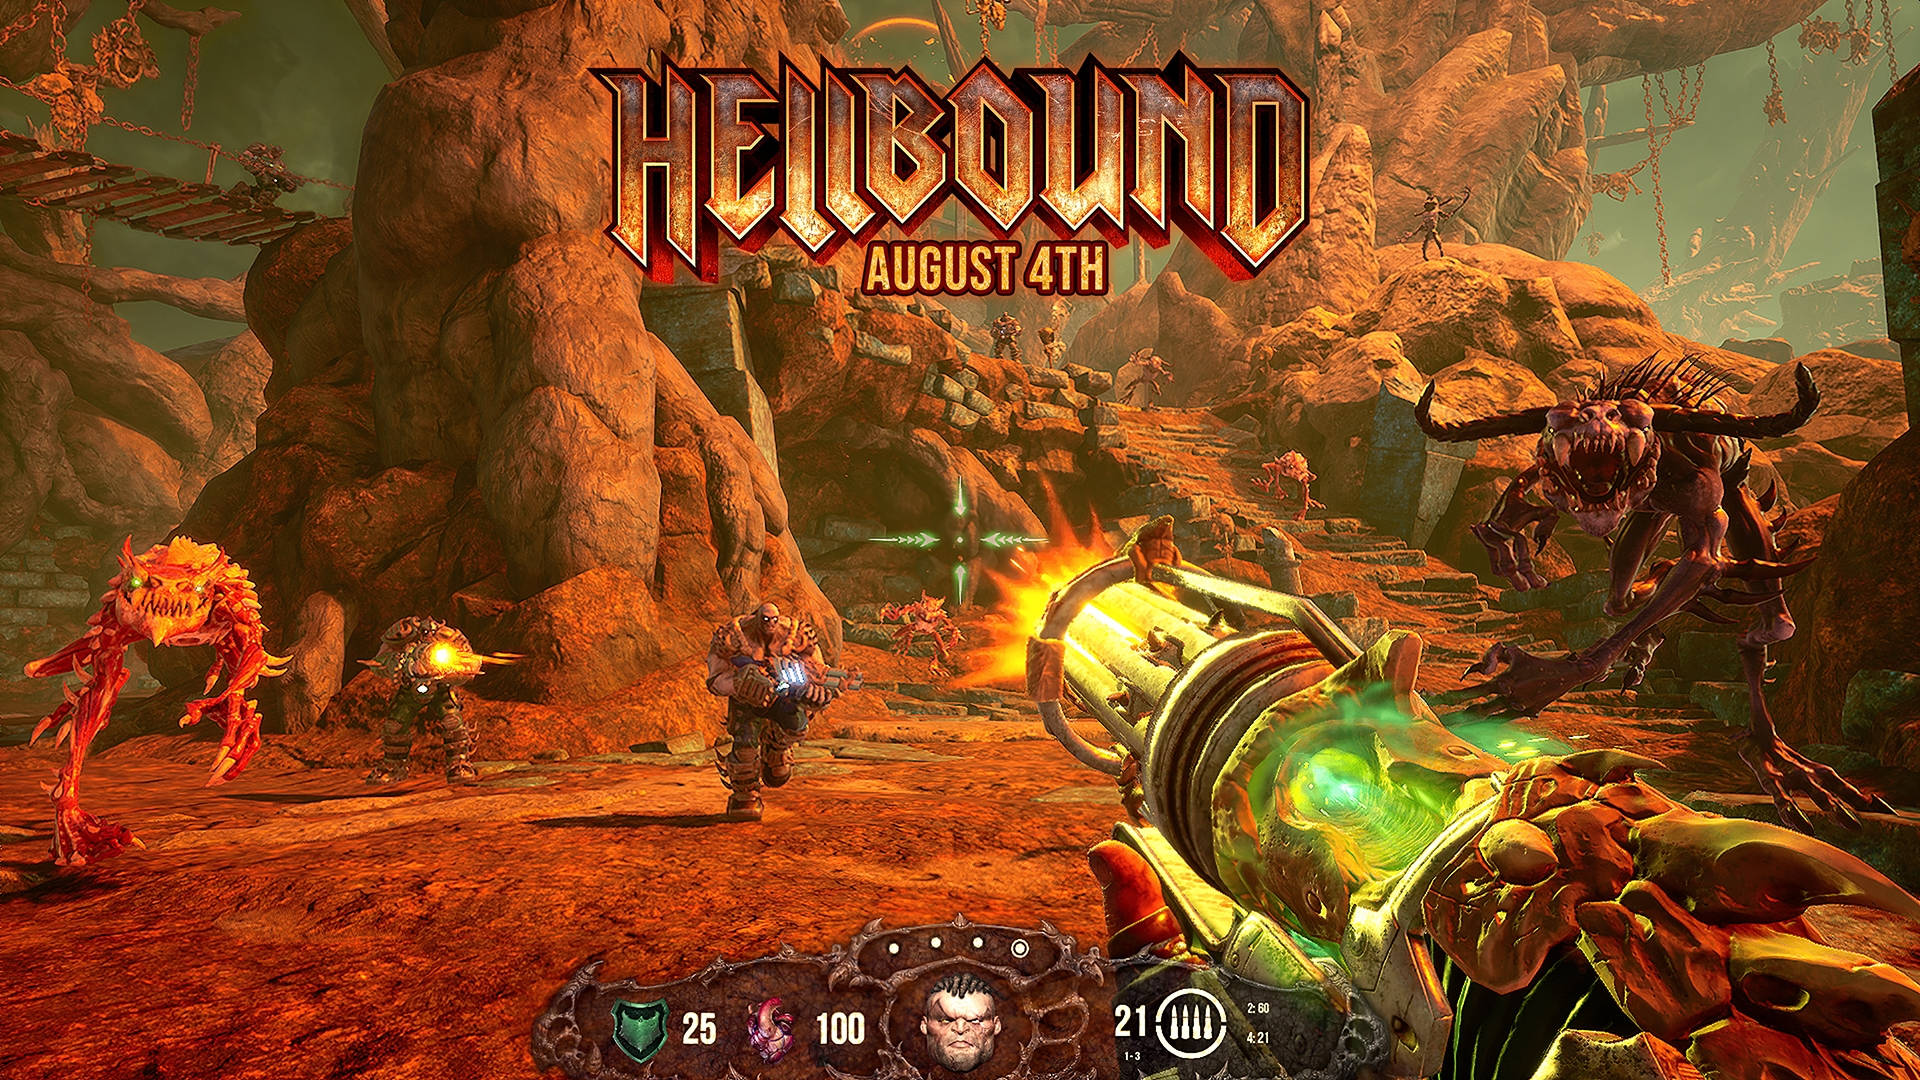 Hellbound Survival Video Game